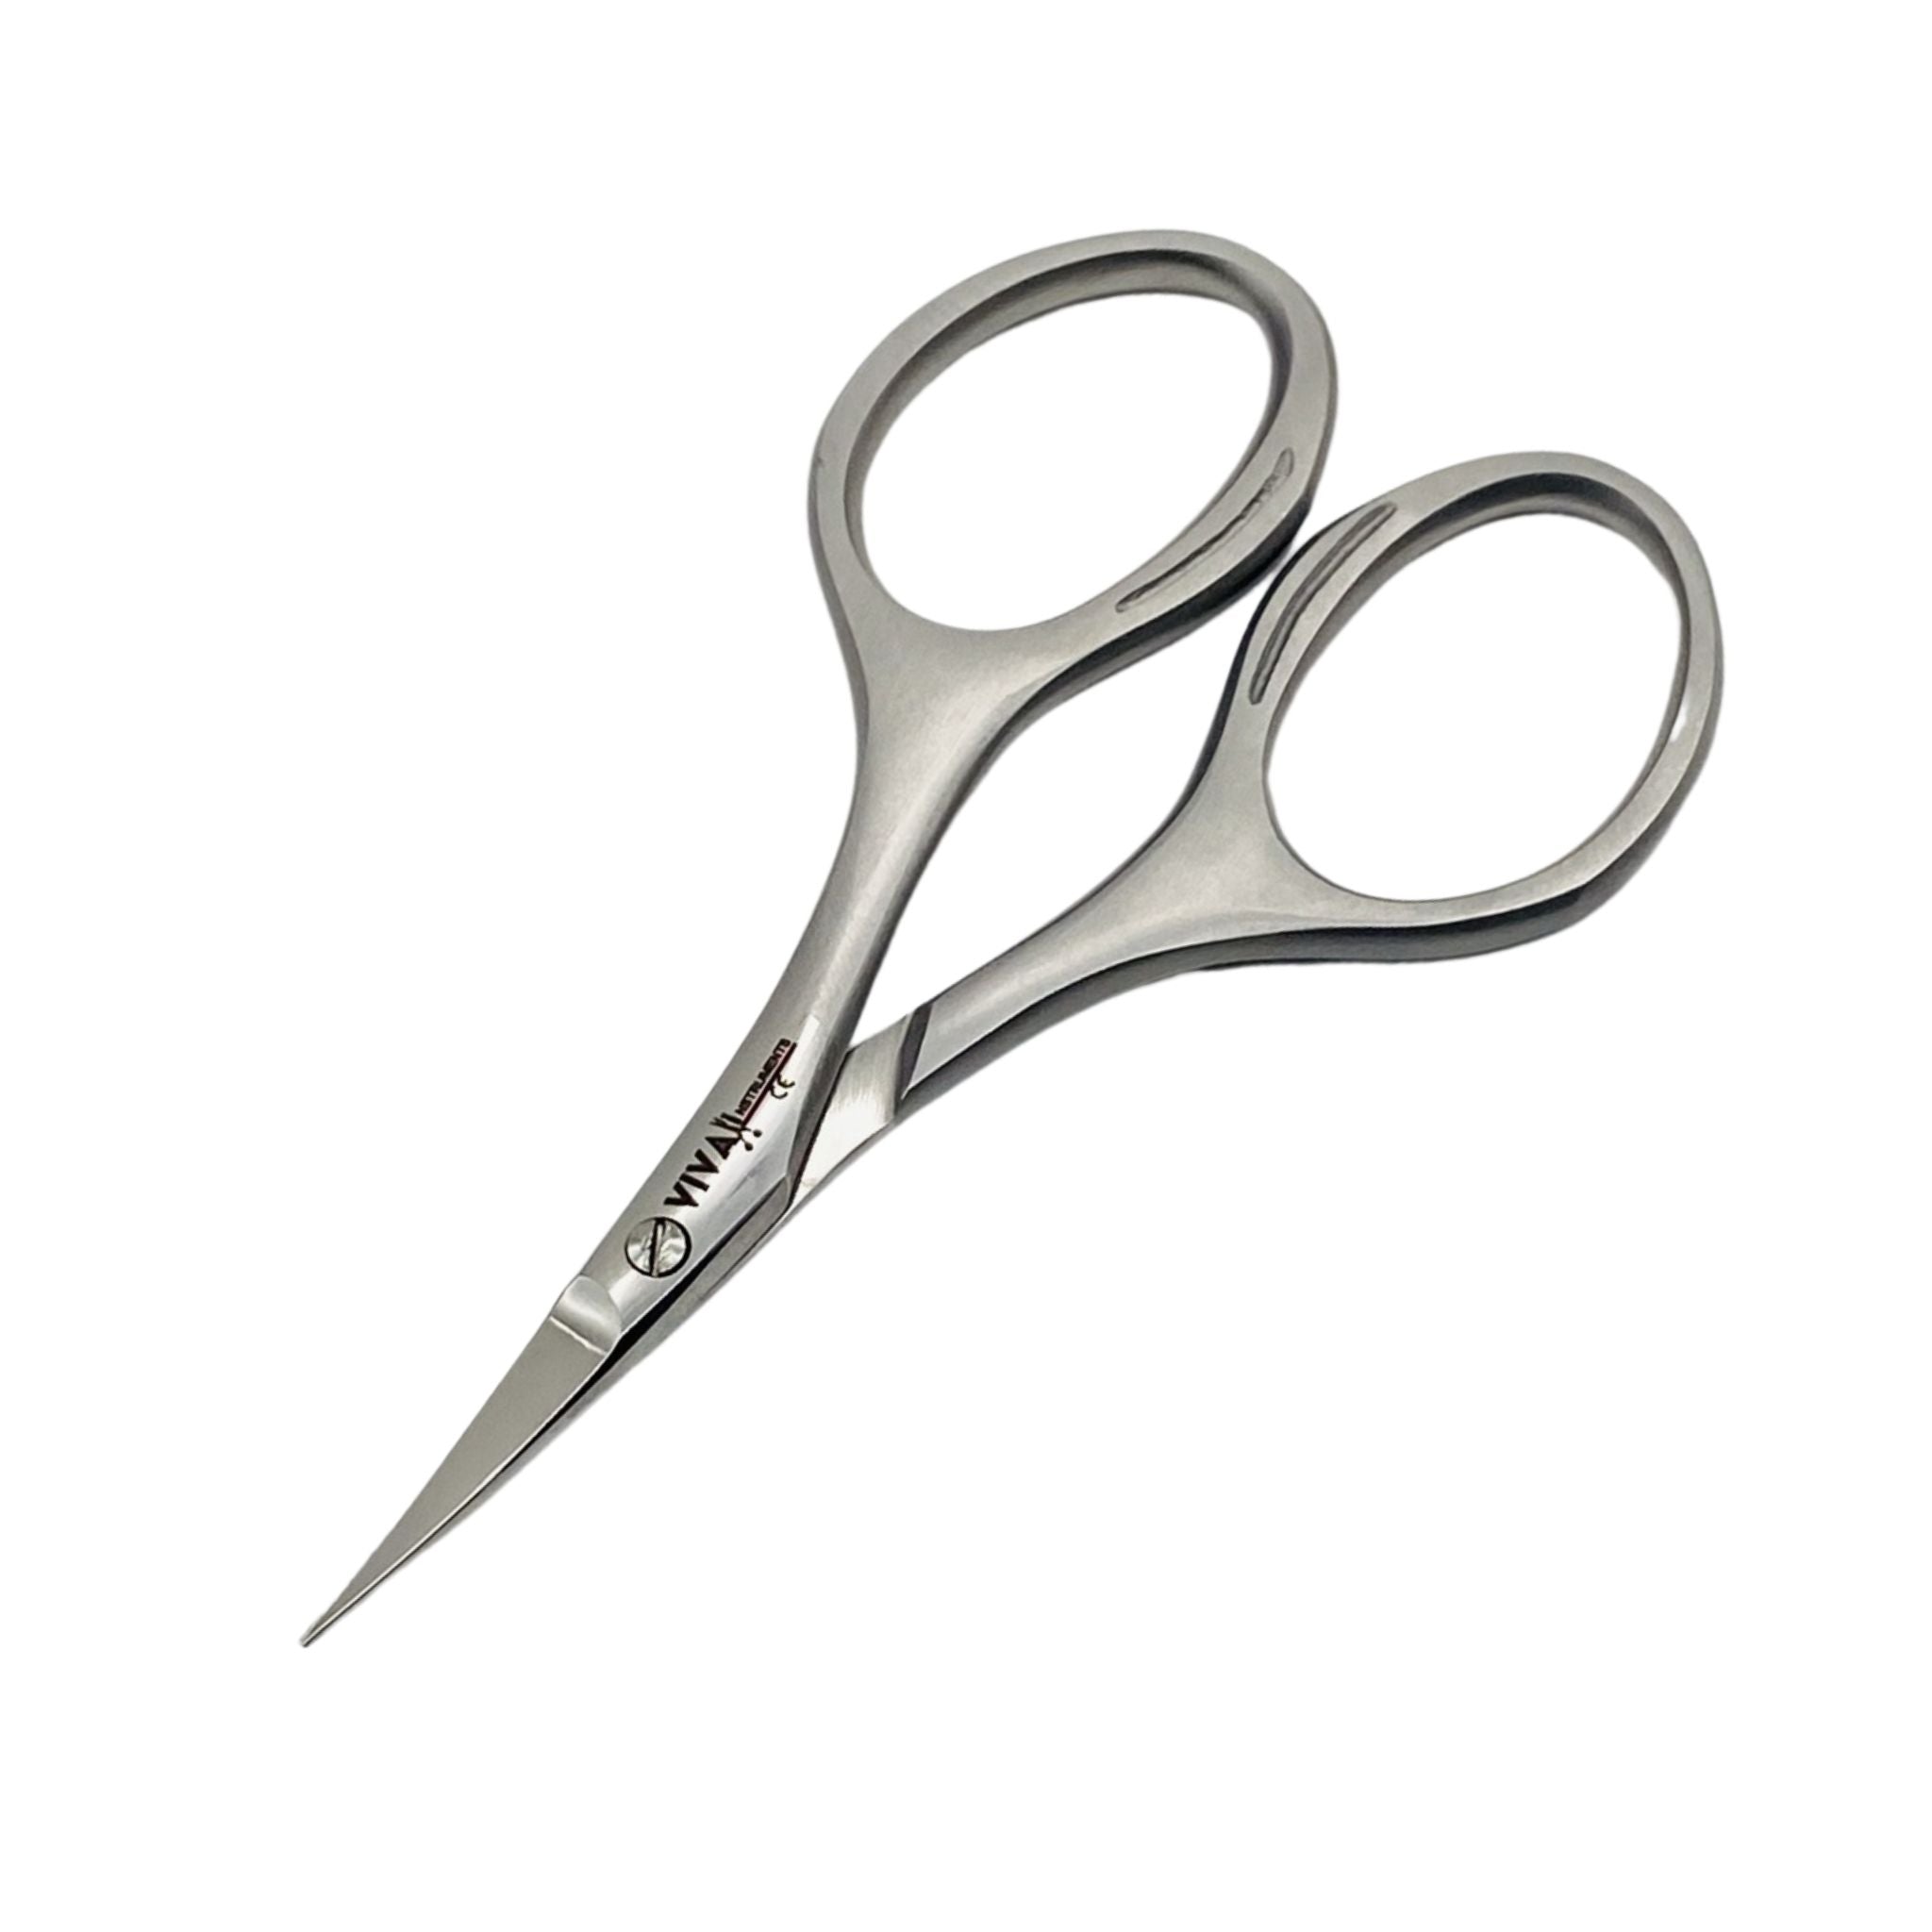 cuticle scissors for nails manicure pedicure tools - viva instruments